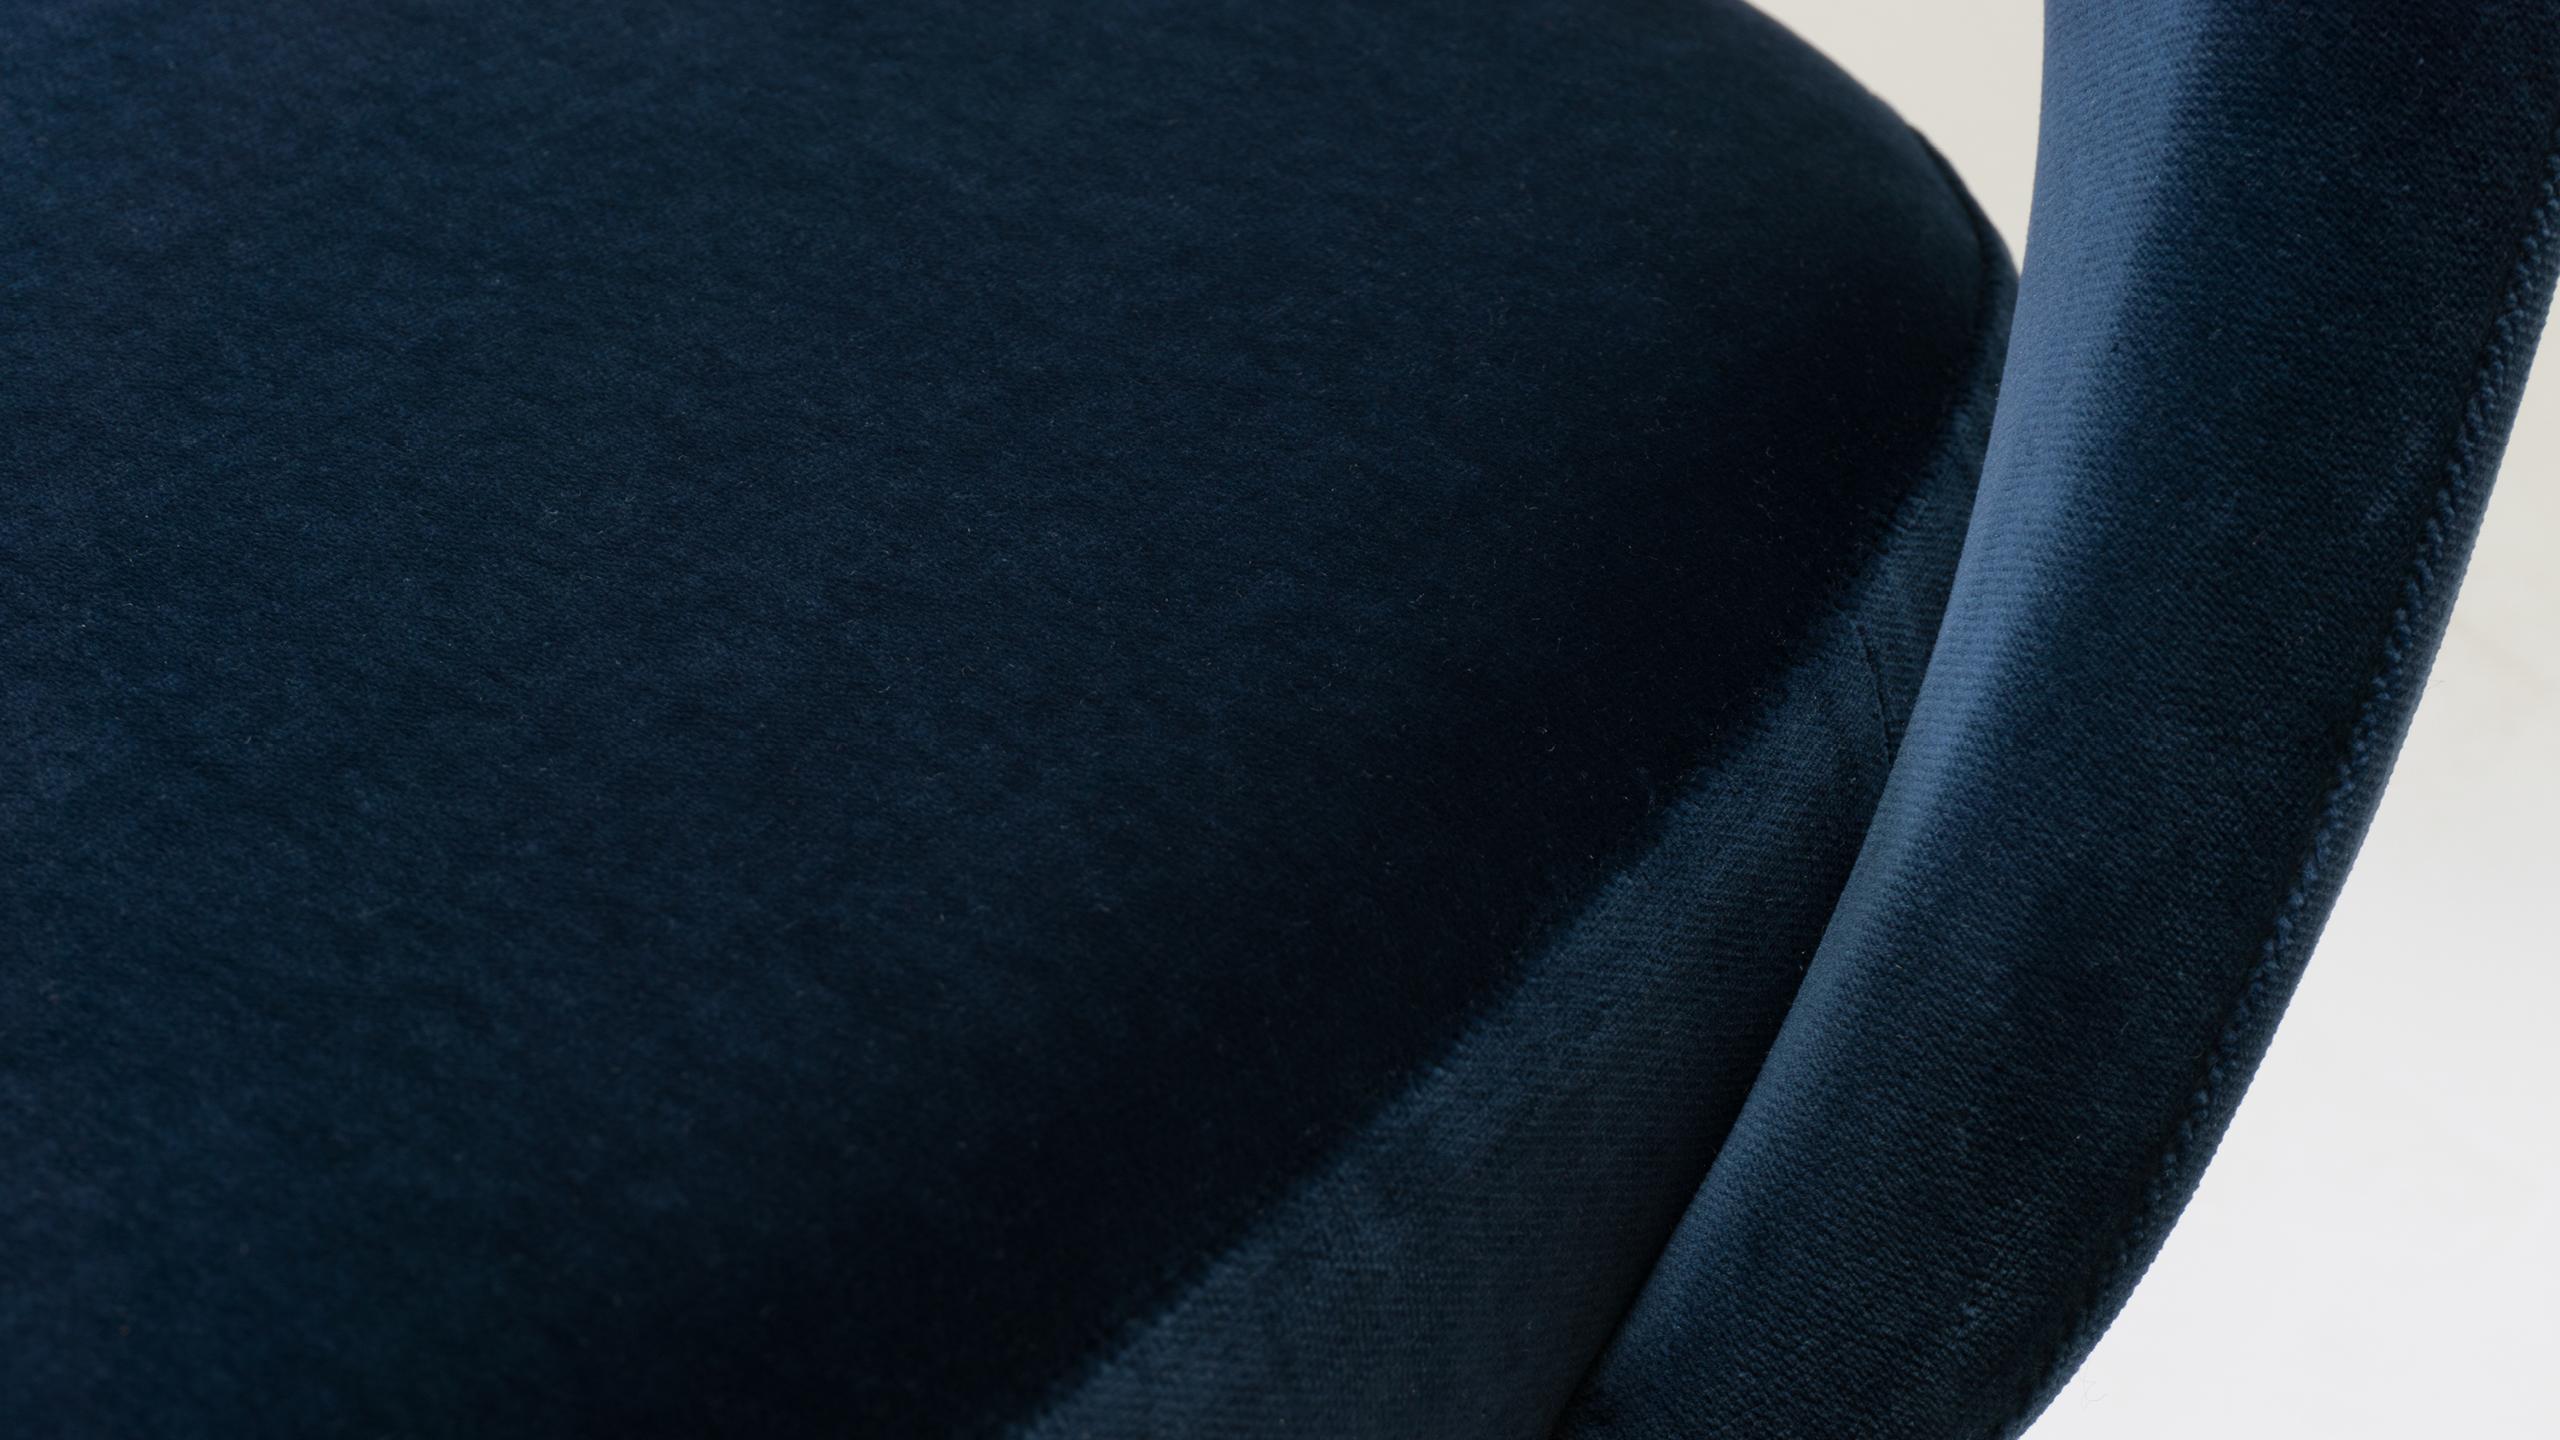 Saarinen fauteuils de direction sans accoudoirs en velours bleu marine, mat obsidienne en vente 1